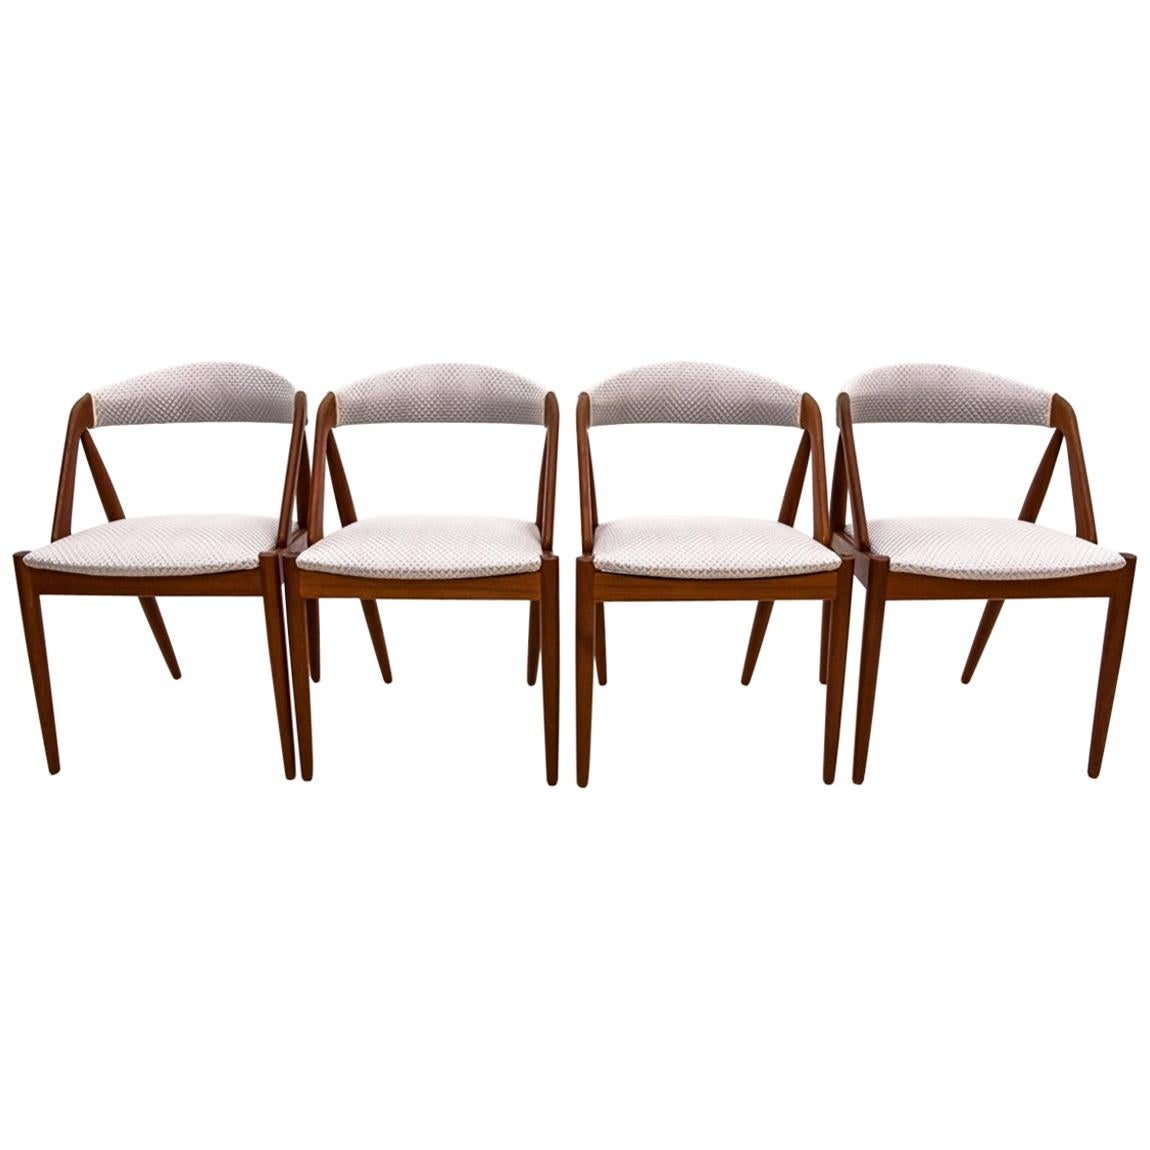 Four Kai Kristiansen Model 31 Teak Dining Room Chairs